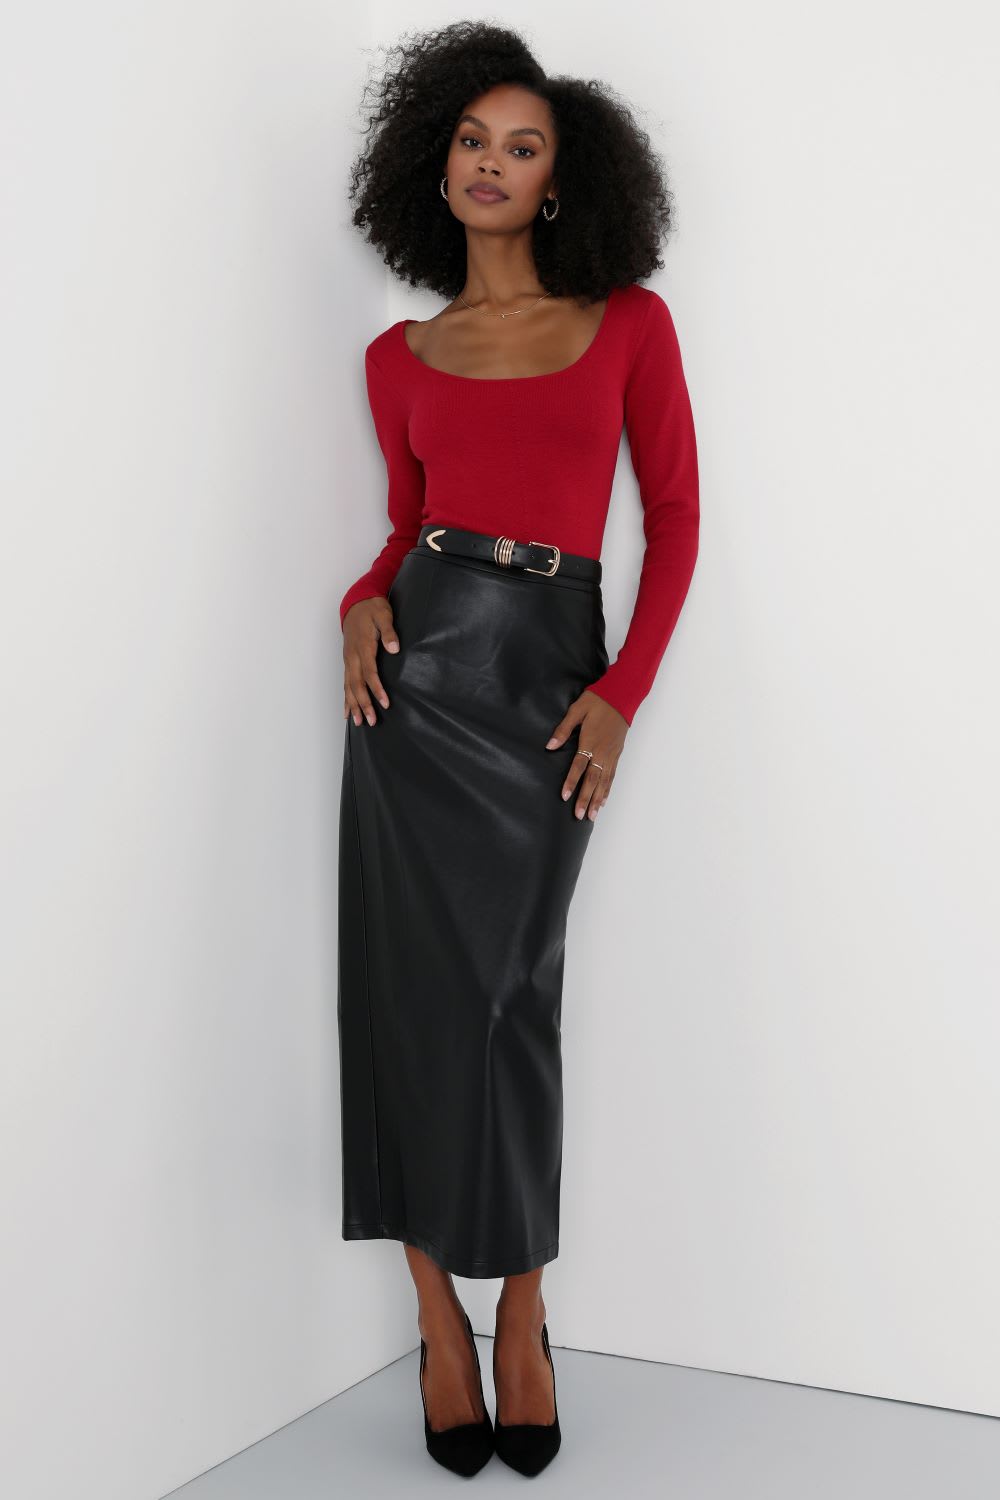 Long Skirt Outfits: How To Style Maxis & Midis This Season -   Fashion Blog